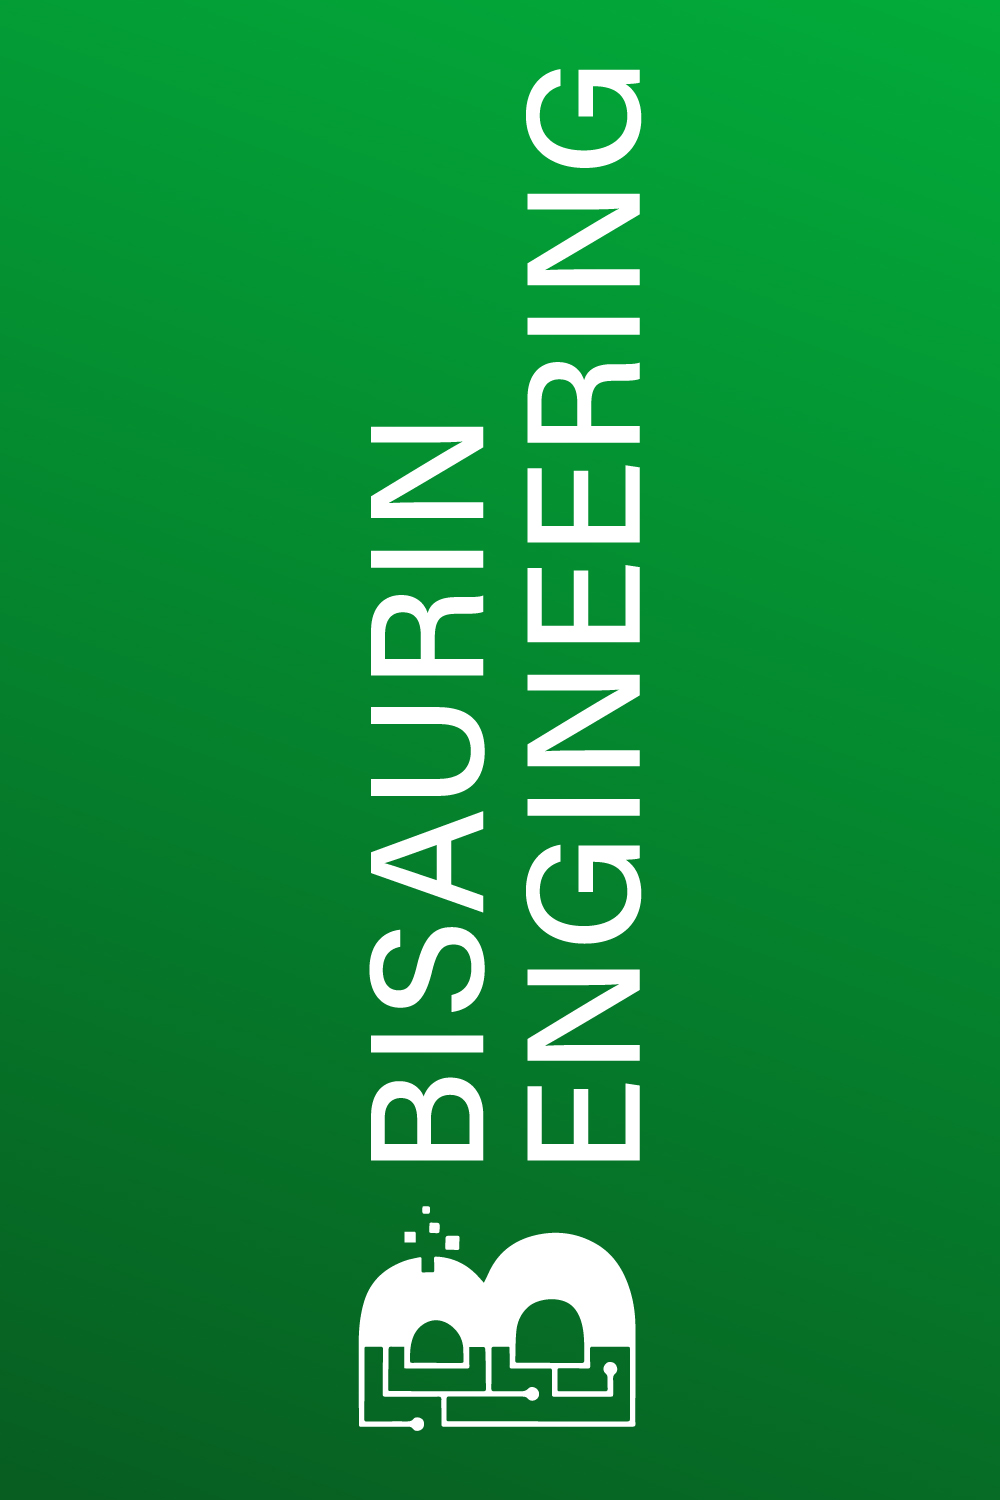 Bisaurin Engineering Logo Designs pinterest preview image.